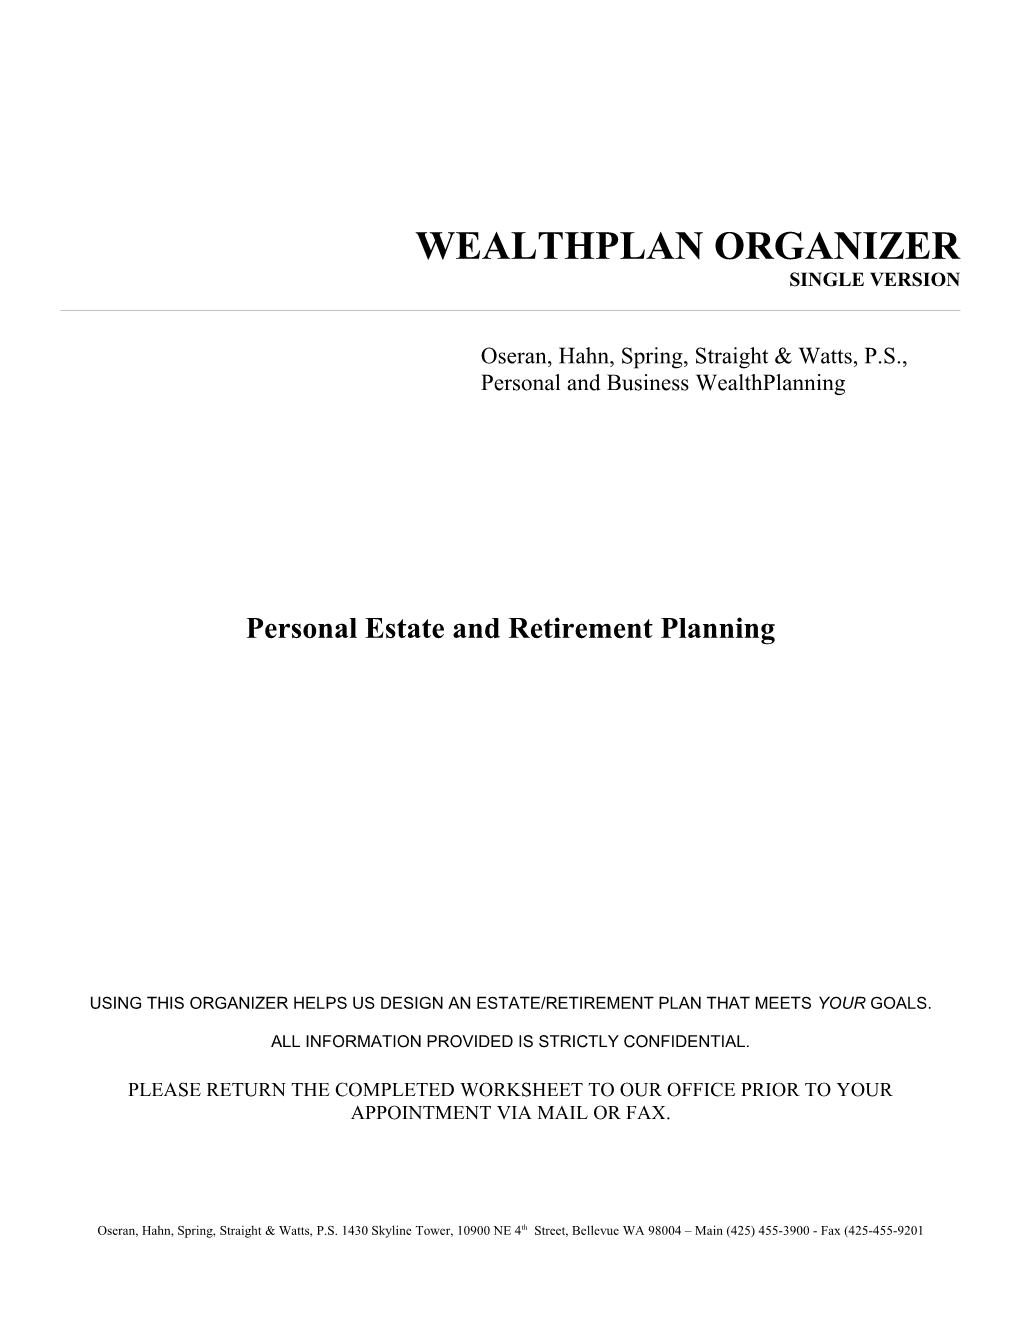 Wealthplan Organizer